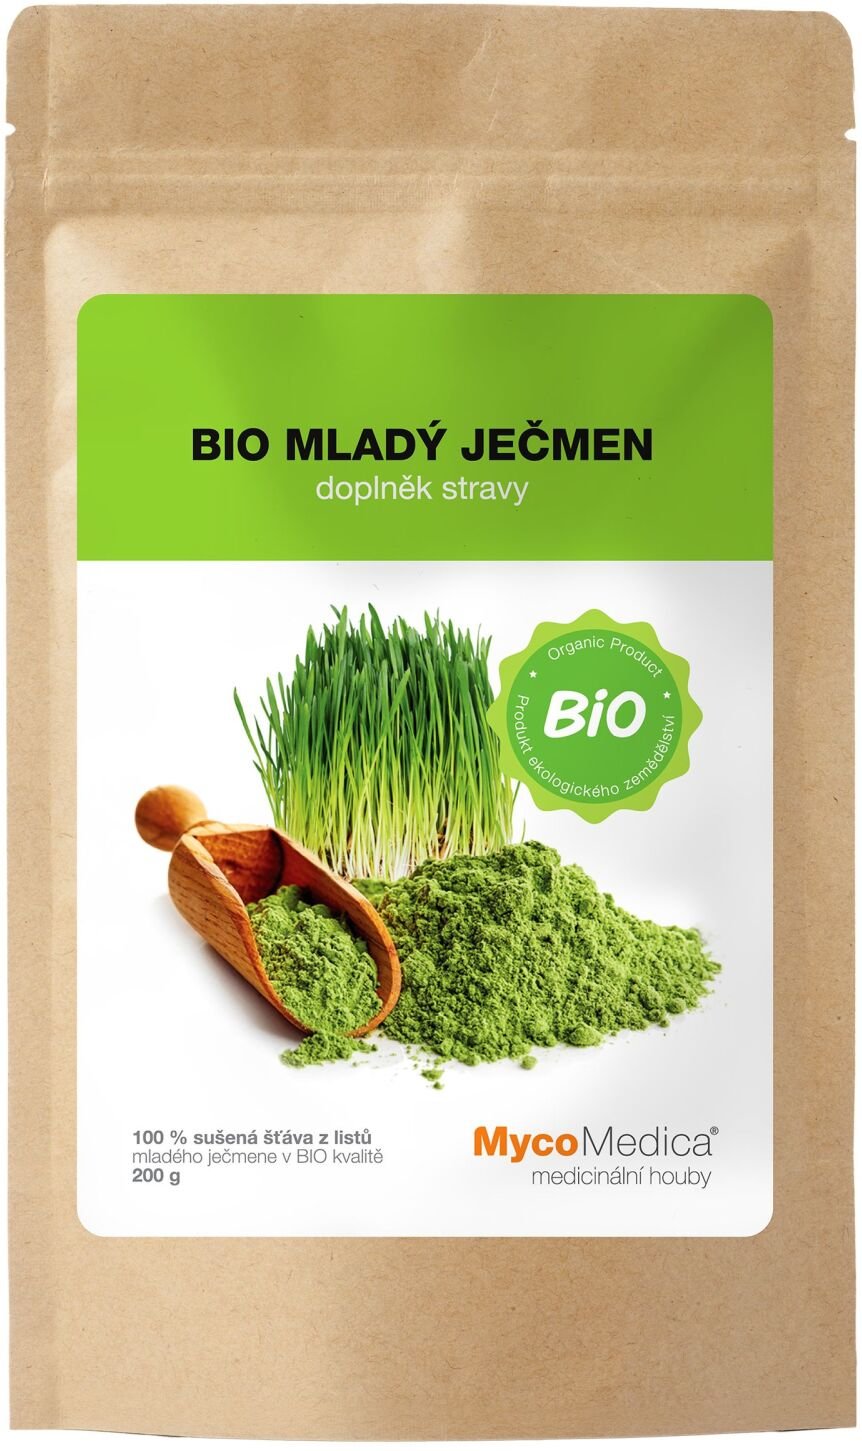 Mycomedica Biomlady Jacmen 200g